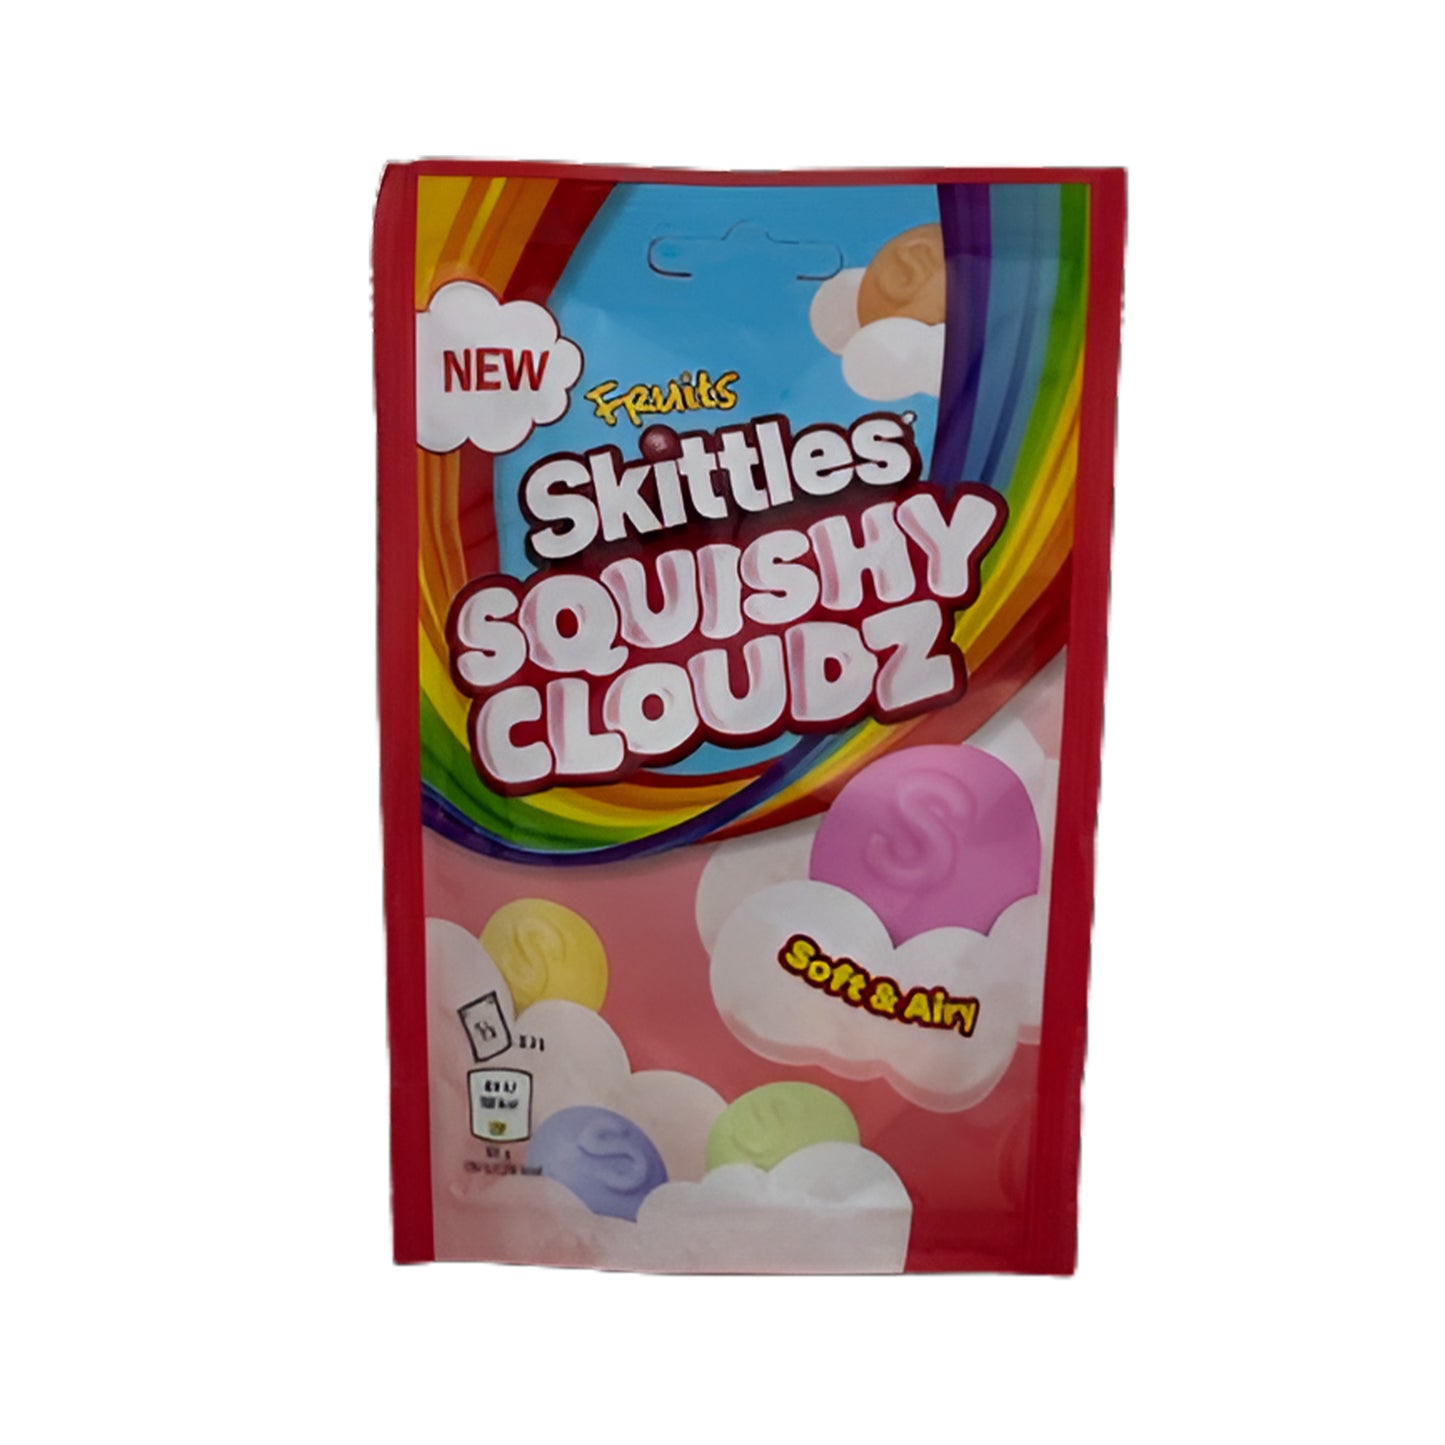 Skittles Squishy Cloudz Crazy Fruits